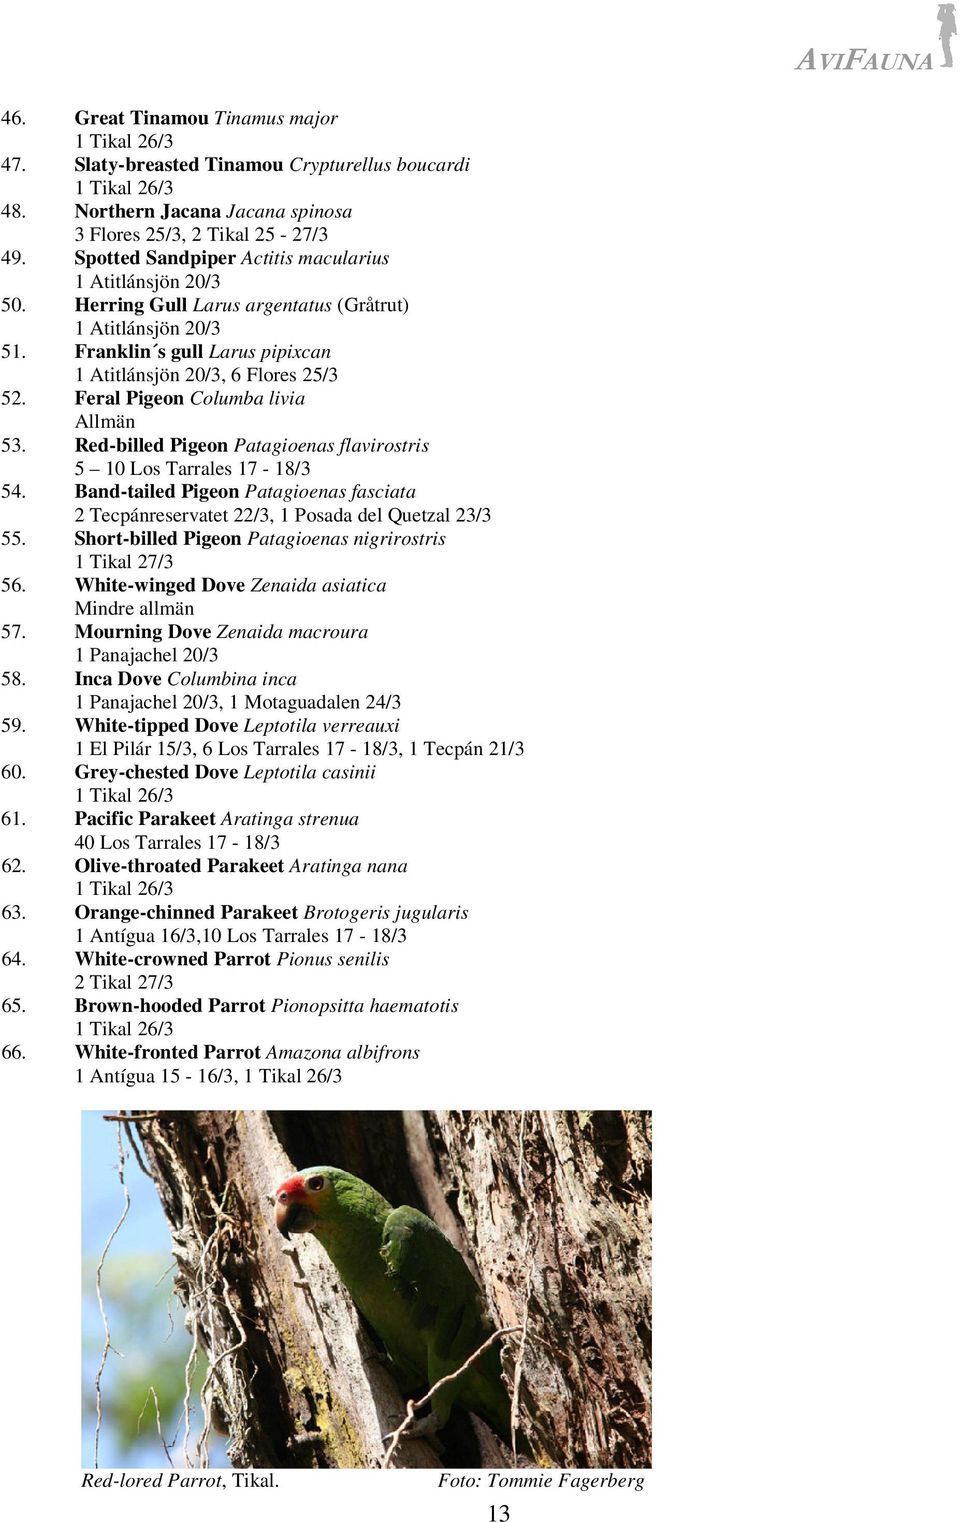 Feral Pigeon Columba livia Allmän 53. Red-billed Pigeon Patagioenas flavirostris 5 10 Los Tarrales 17-18/3 54.